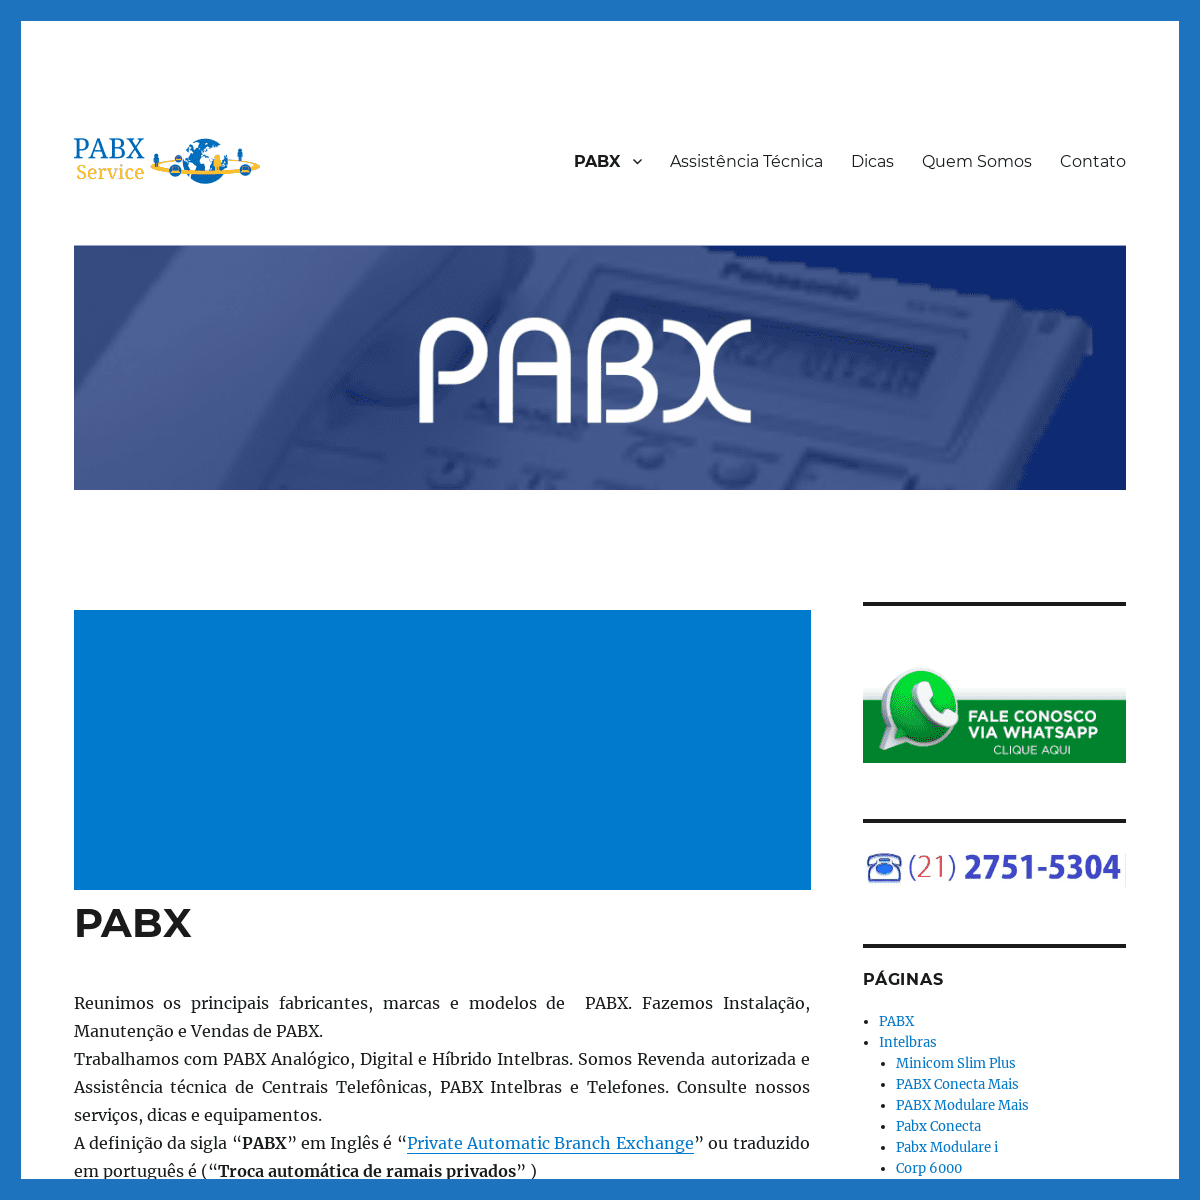 Pabx Service